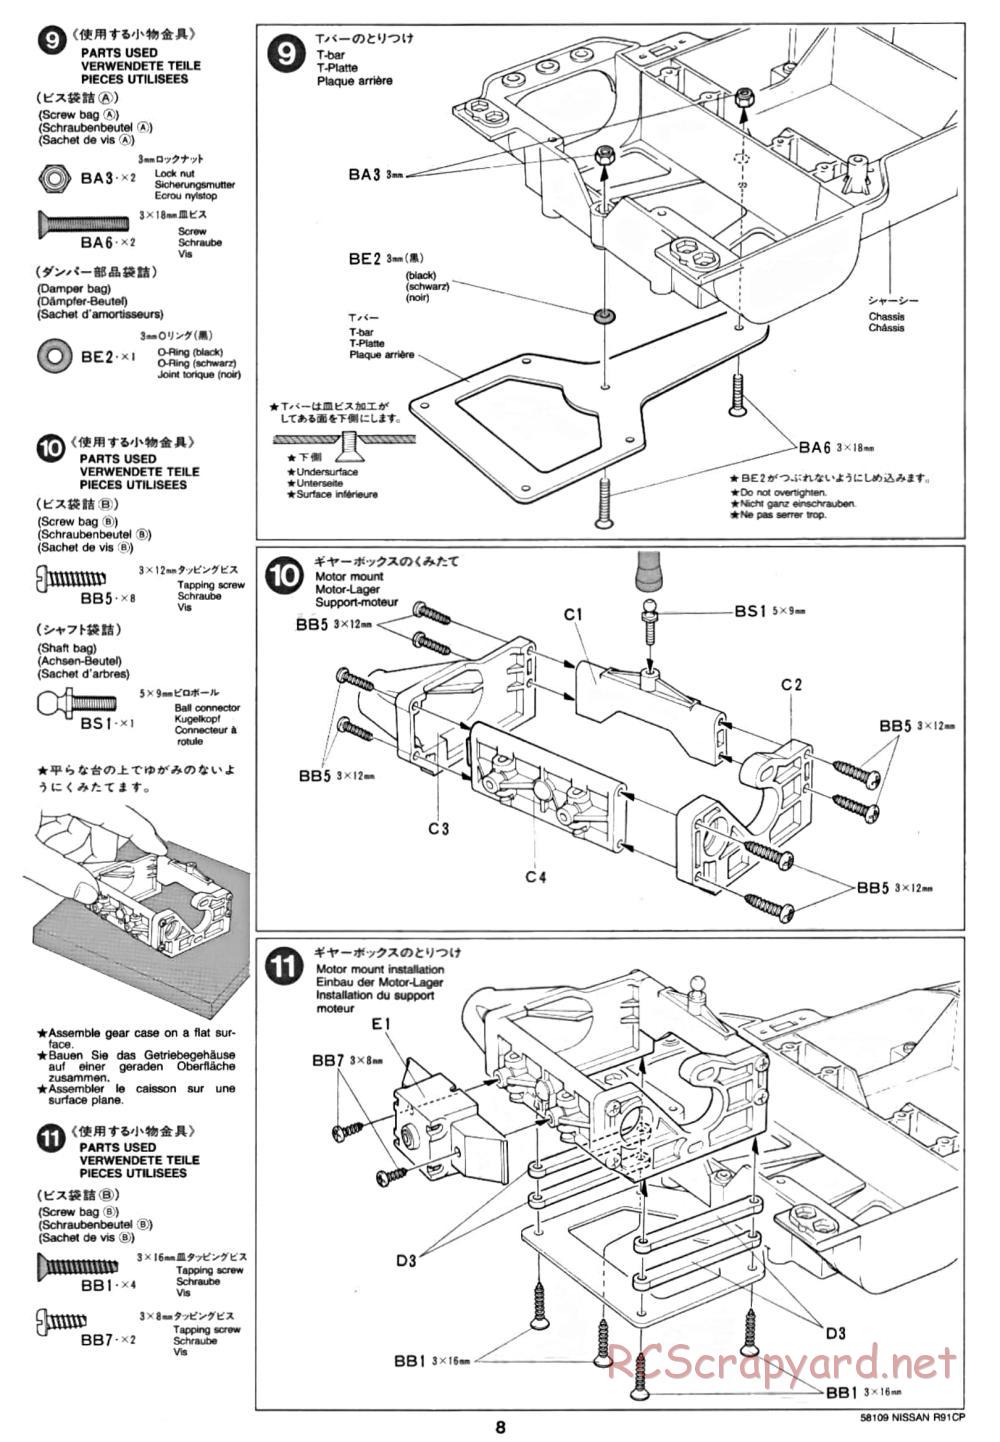 Tamiya - Nissan R91CP - Group-C Chassis - Manual - Page 8